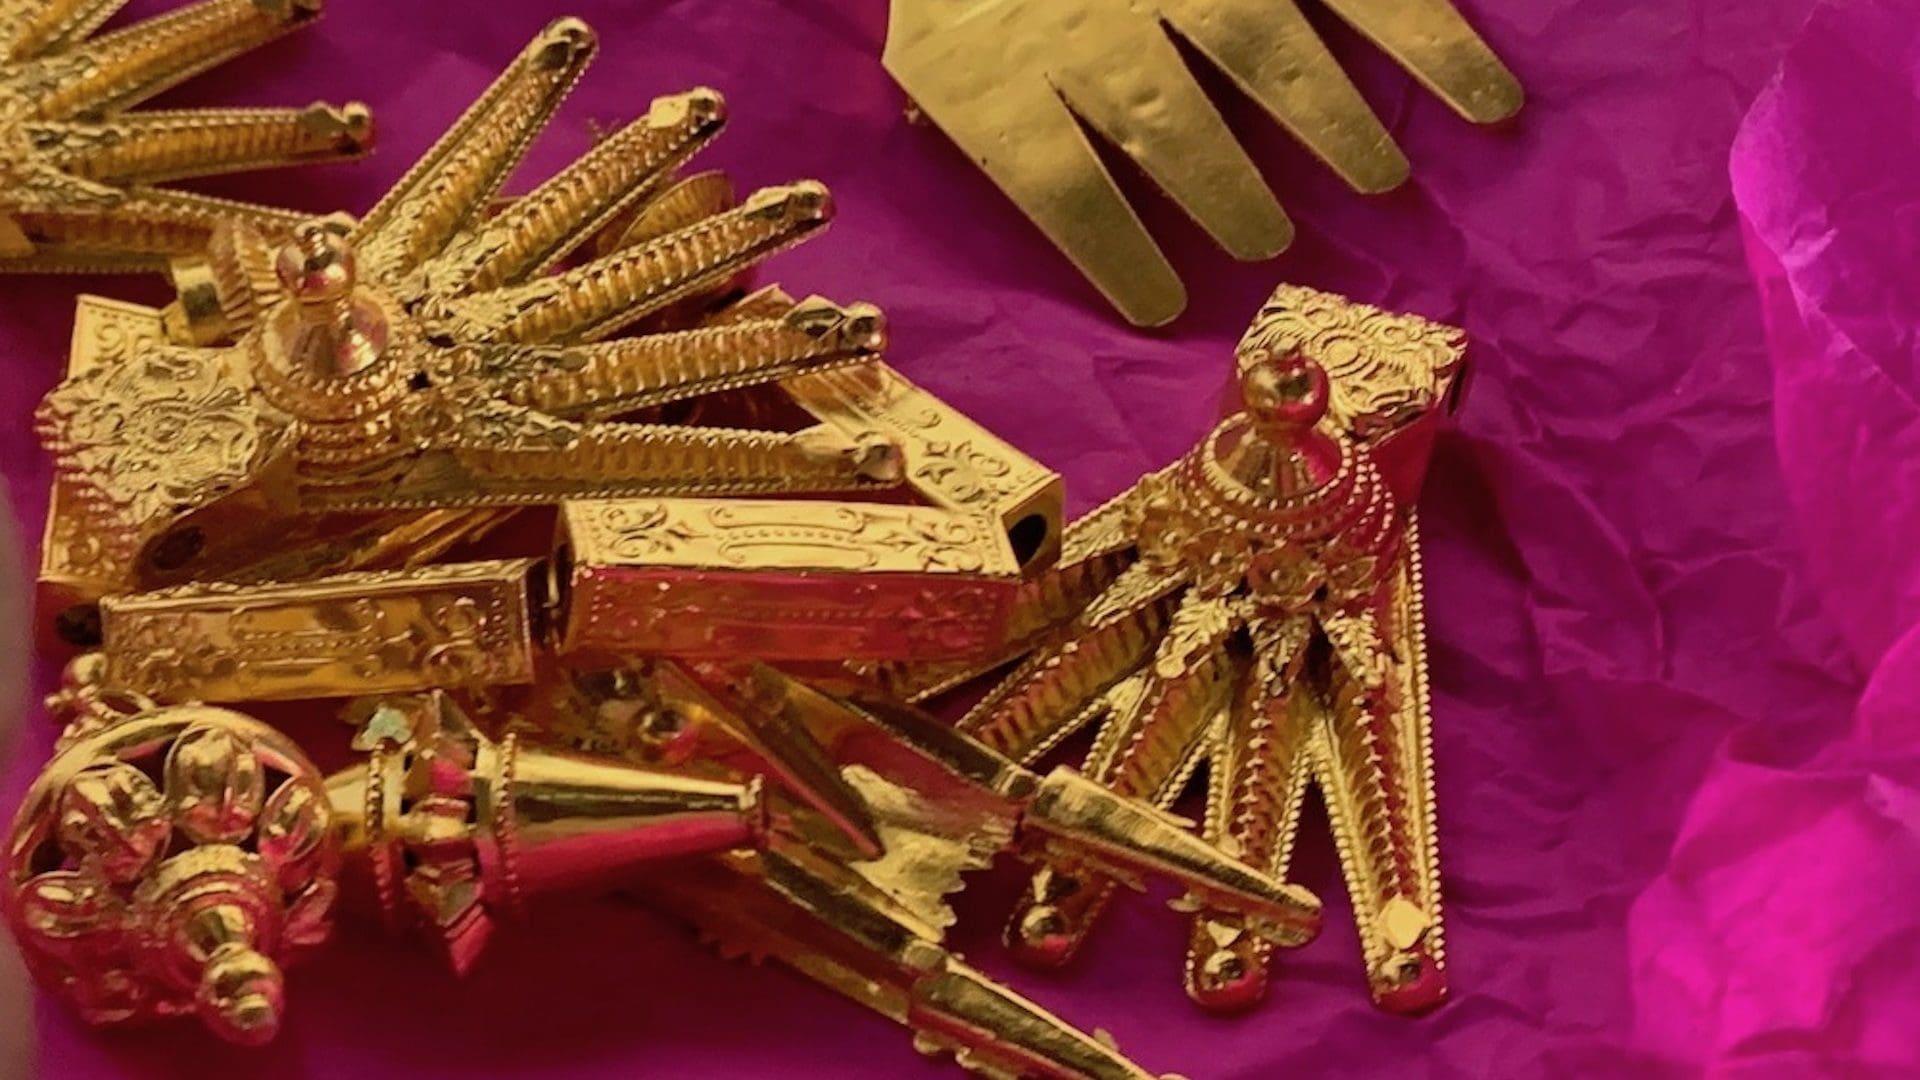 Parts of a Kalathiru necklace